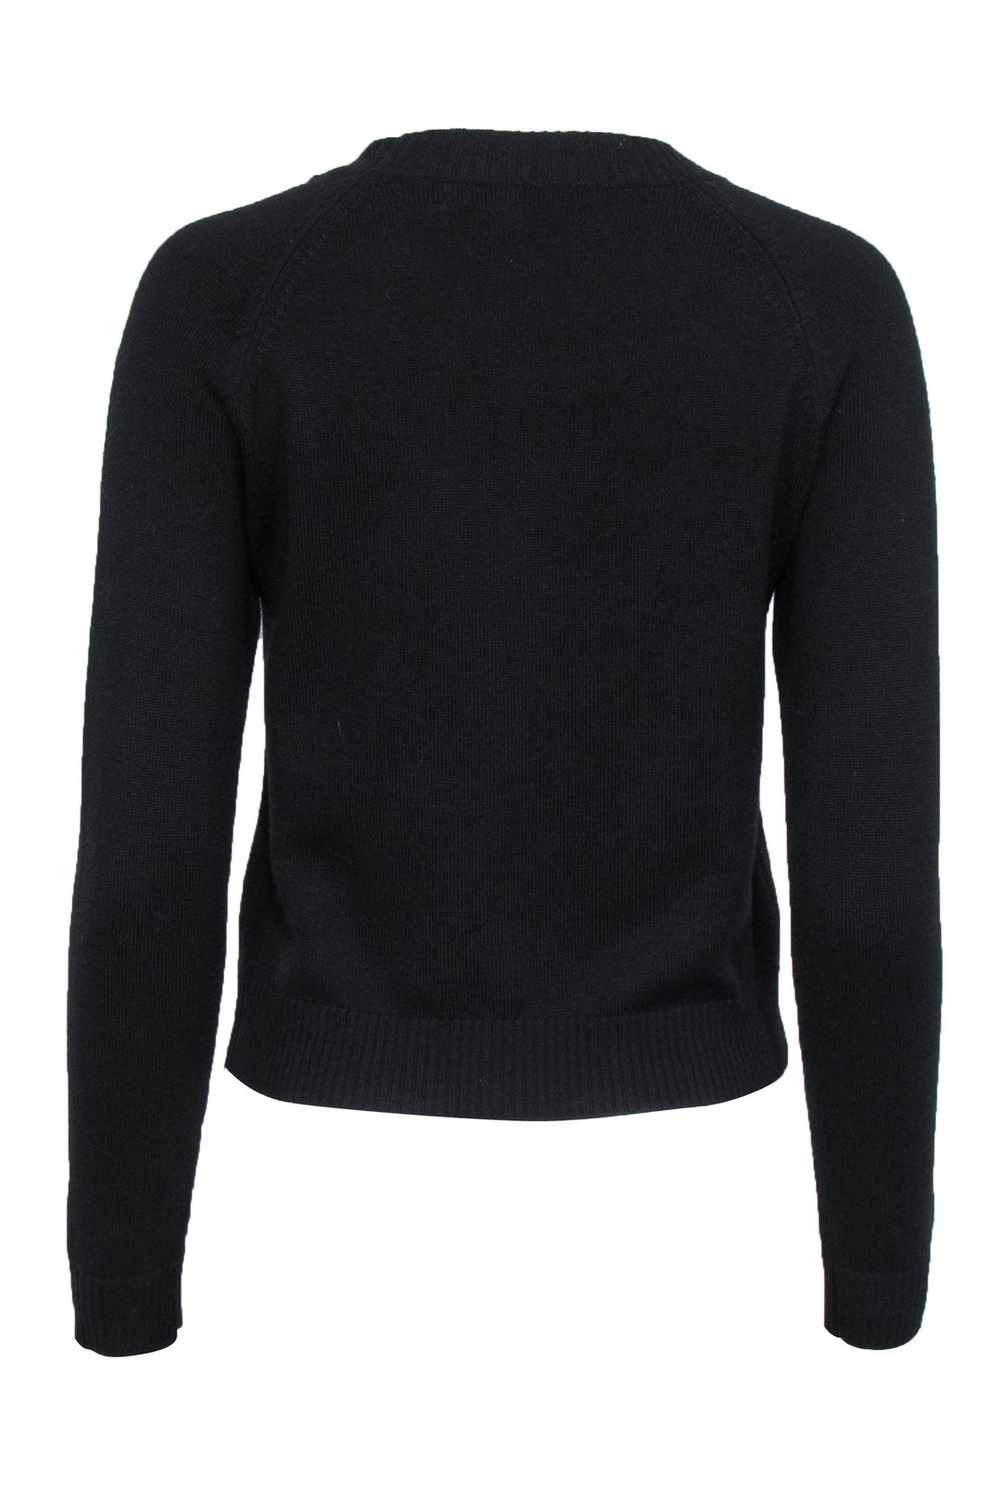 Milly - Black Wool Sweater w/ Cutout Sz P - image 3